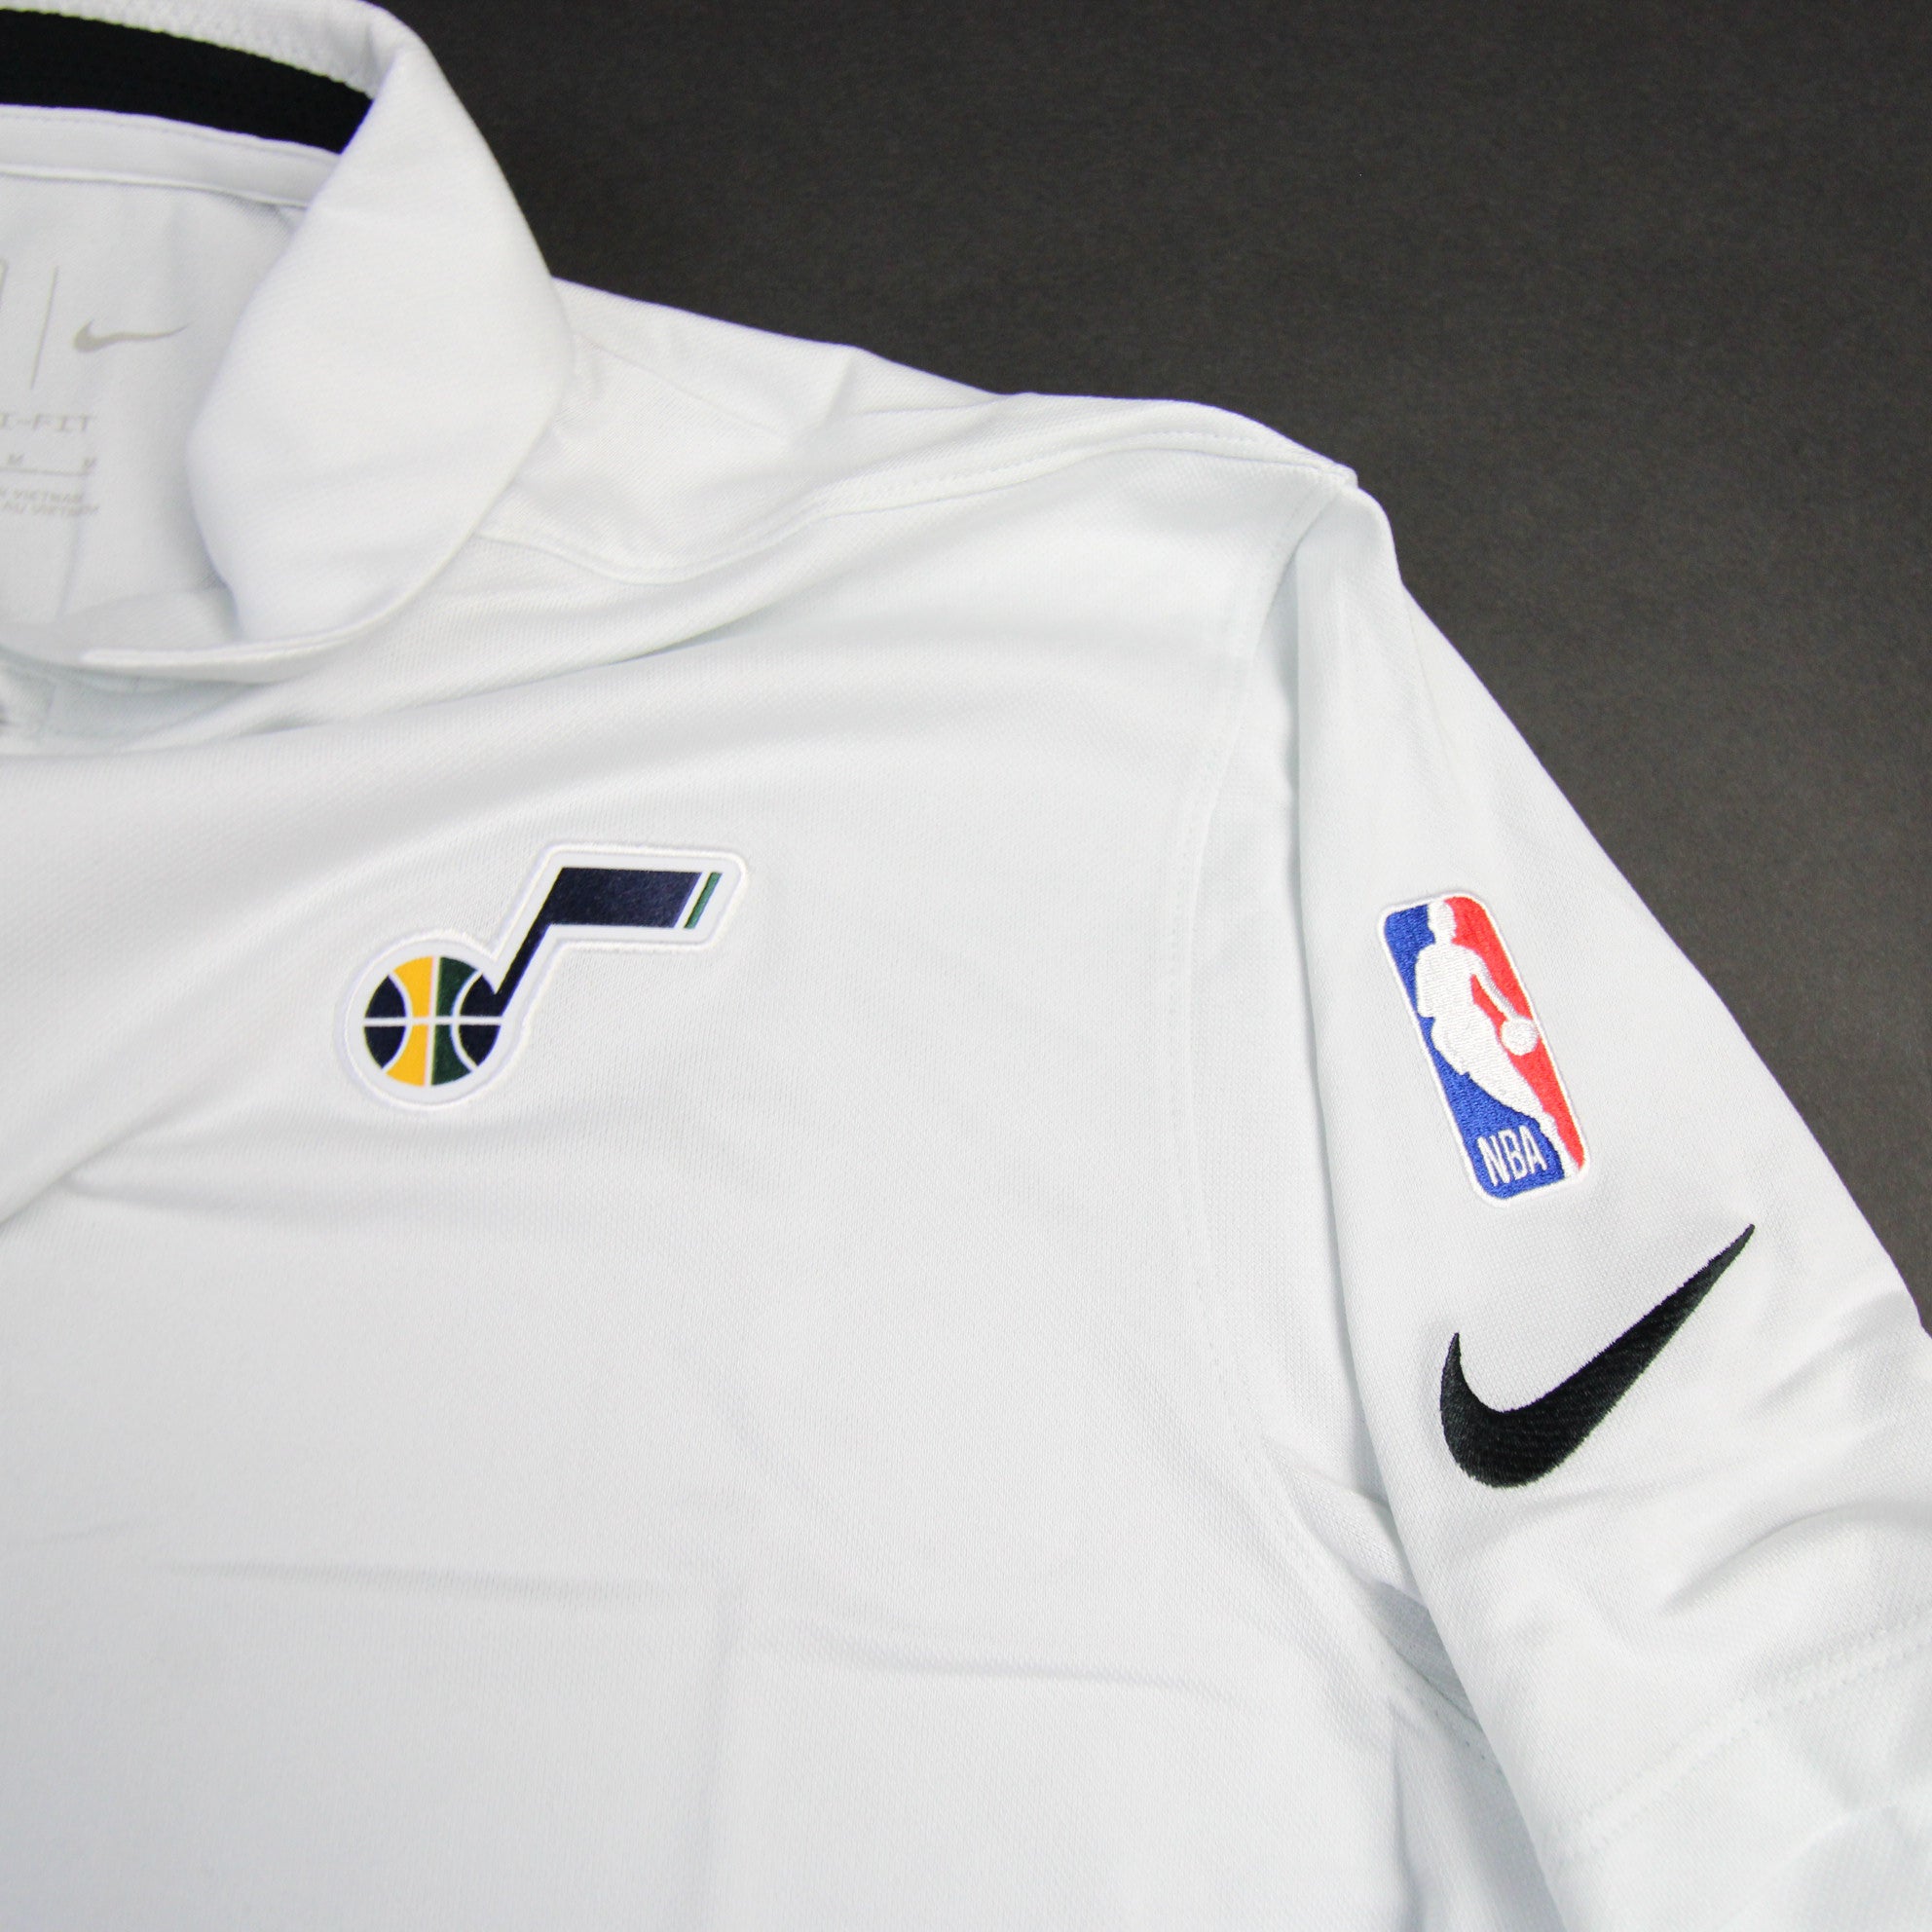 Utah Jazz Men's XL NBA White Striped Logo Short Sleeve Polo Shirt Antigua  Golf